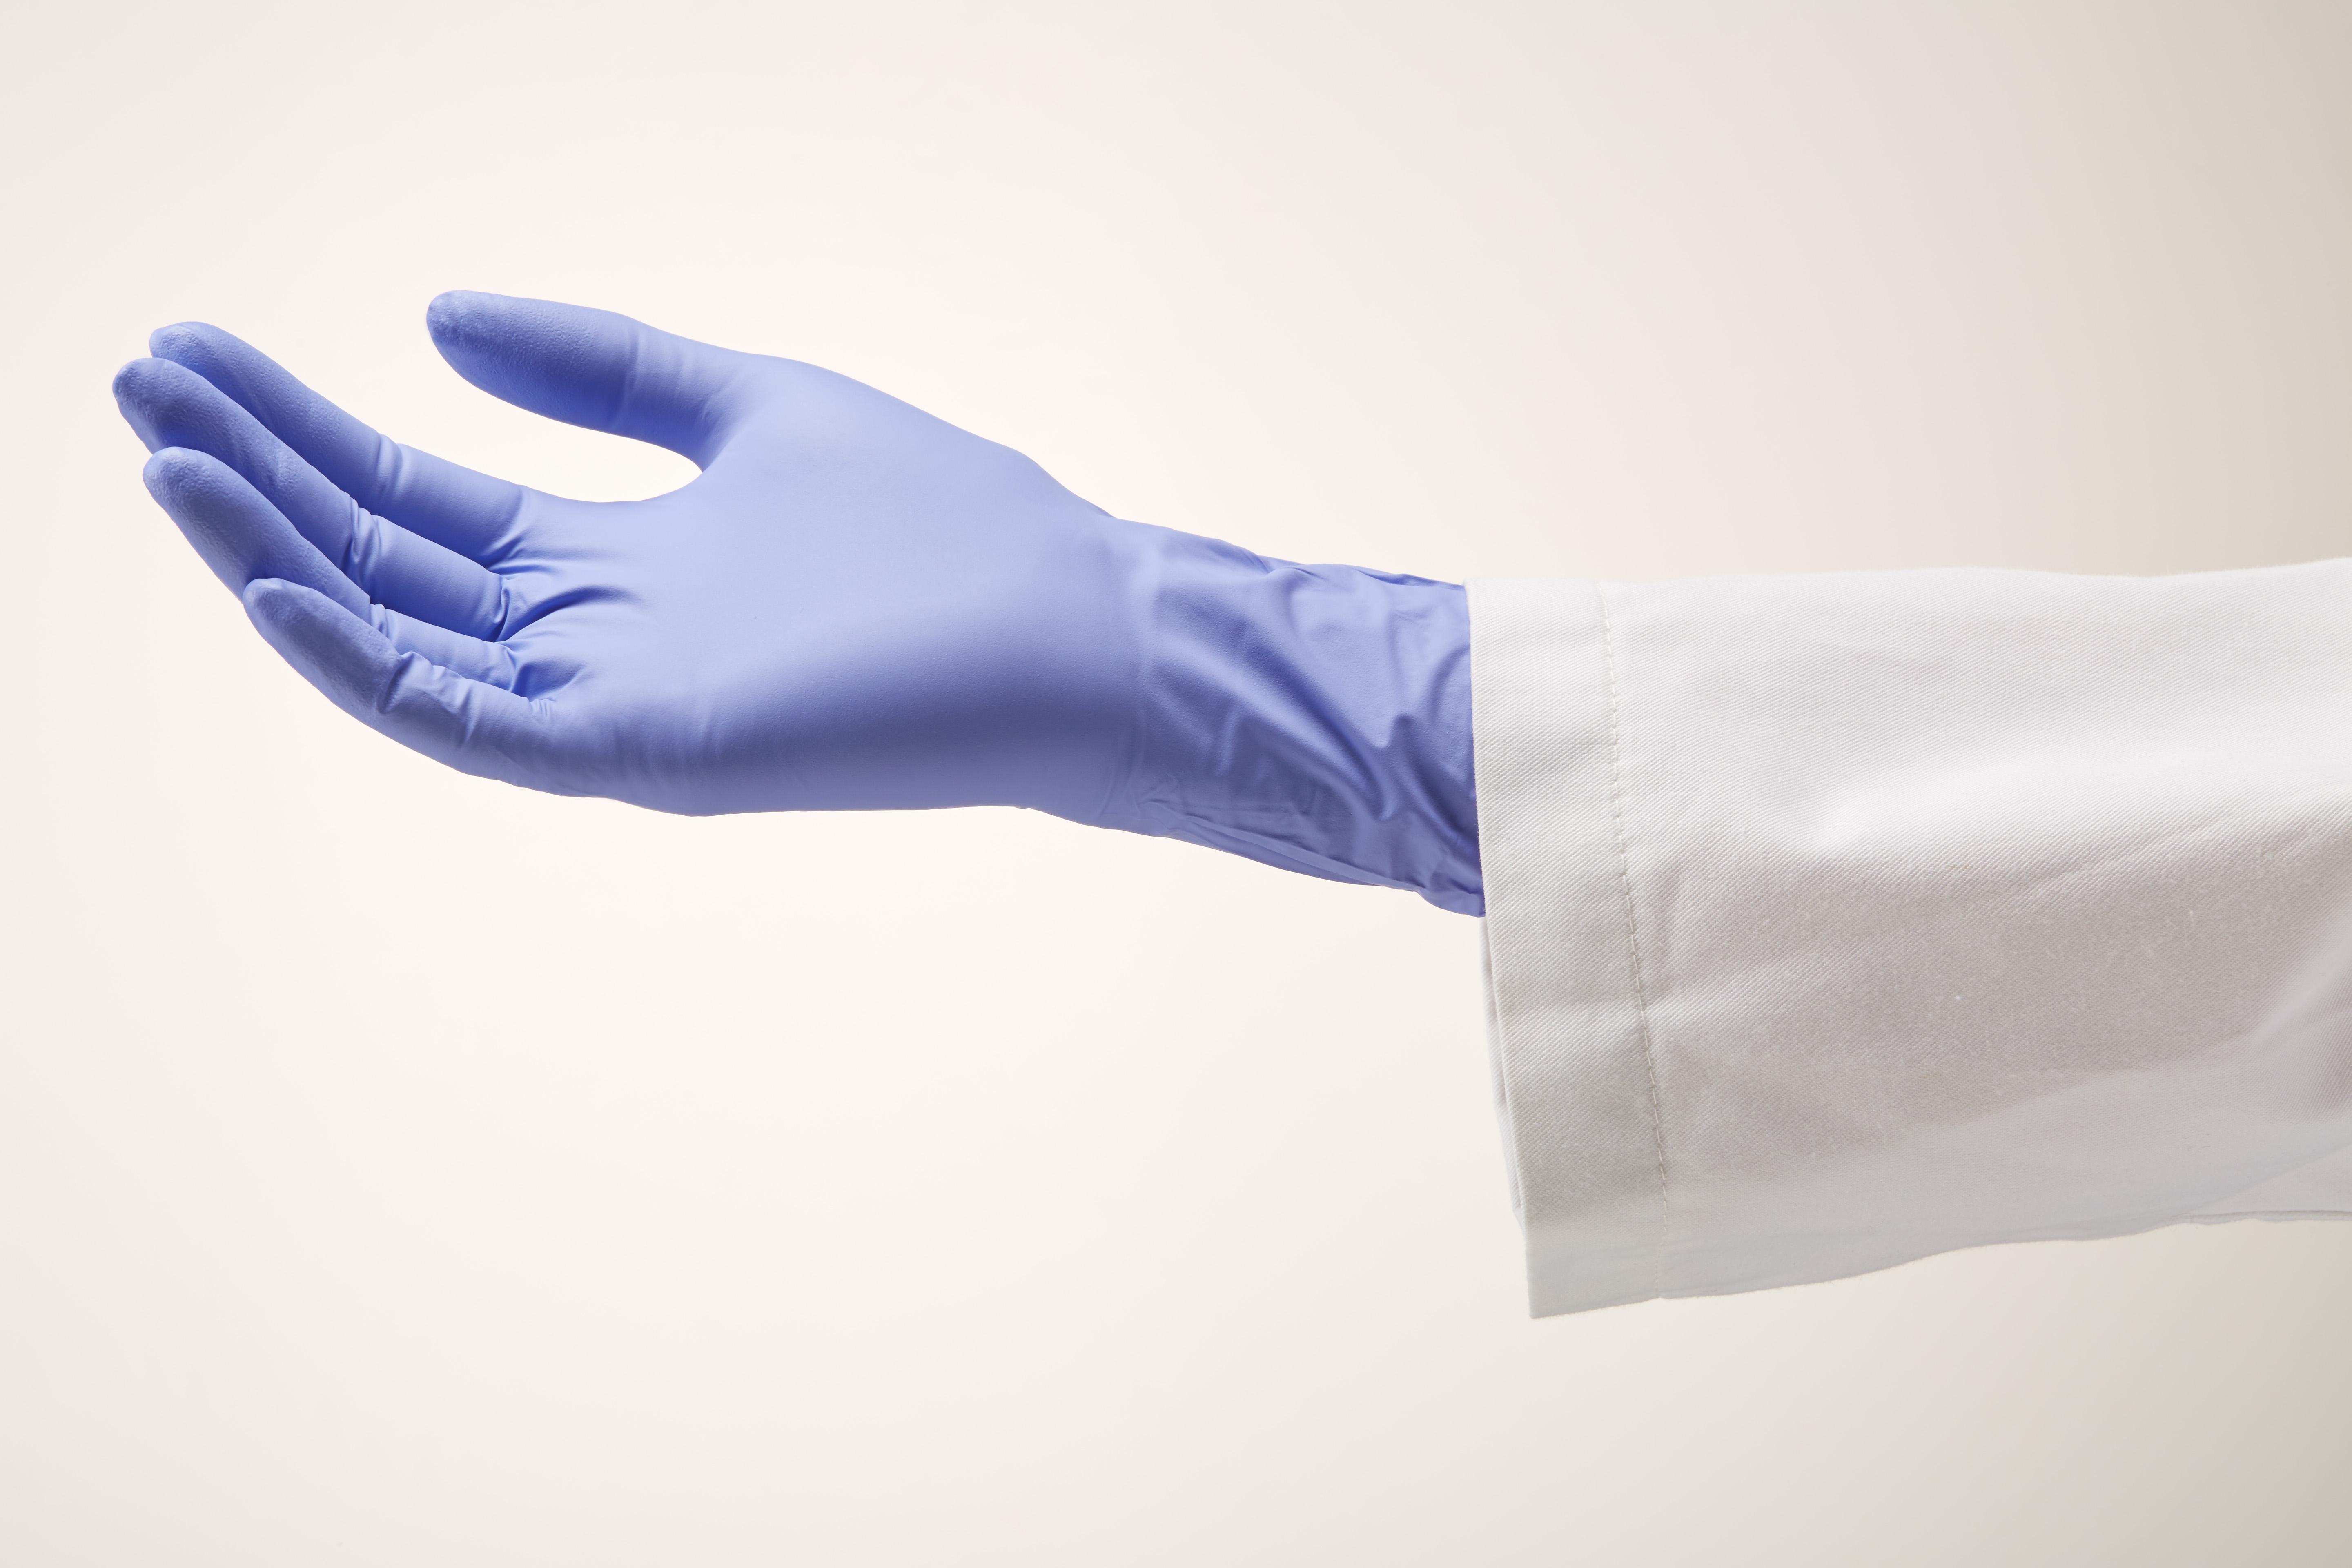  StarGuard PROTECT Nitrile Gloves, Powder Free, Violet-Blue, Size S, Pk/ 10 x 100 gloves.